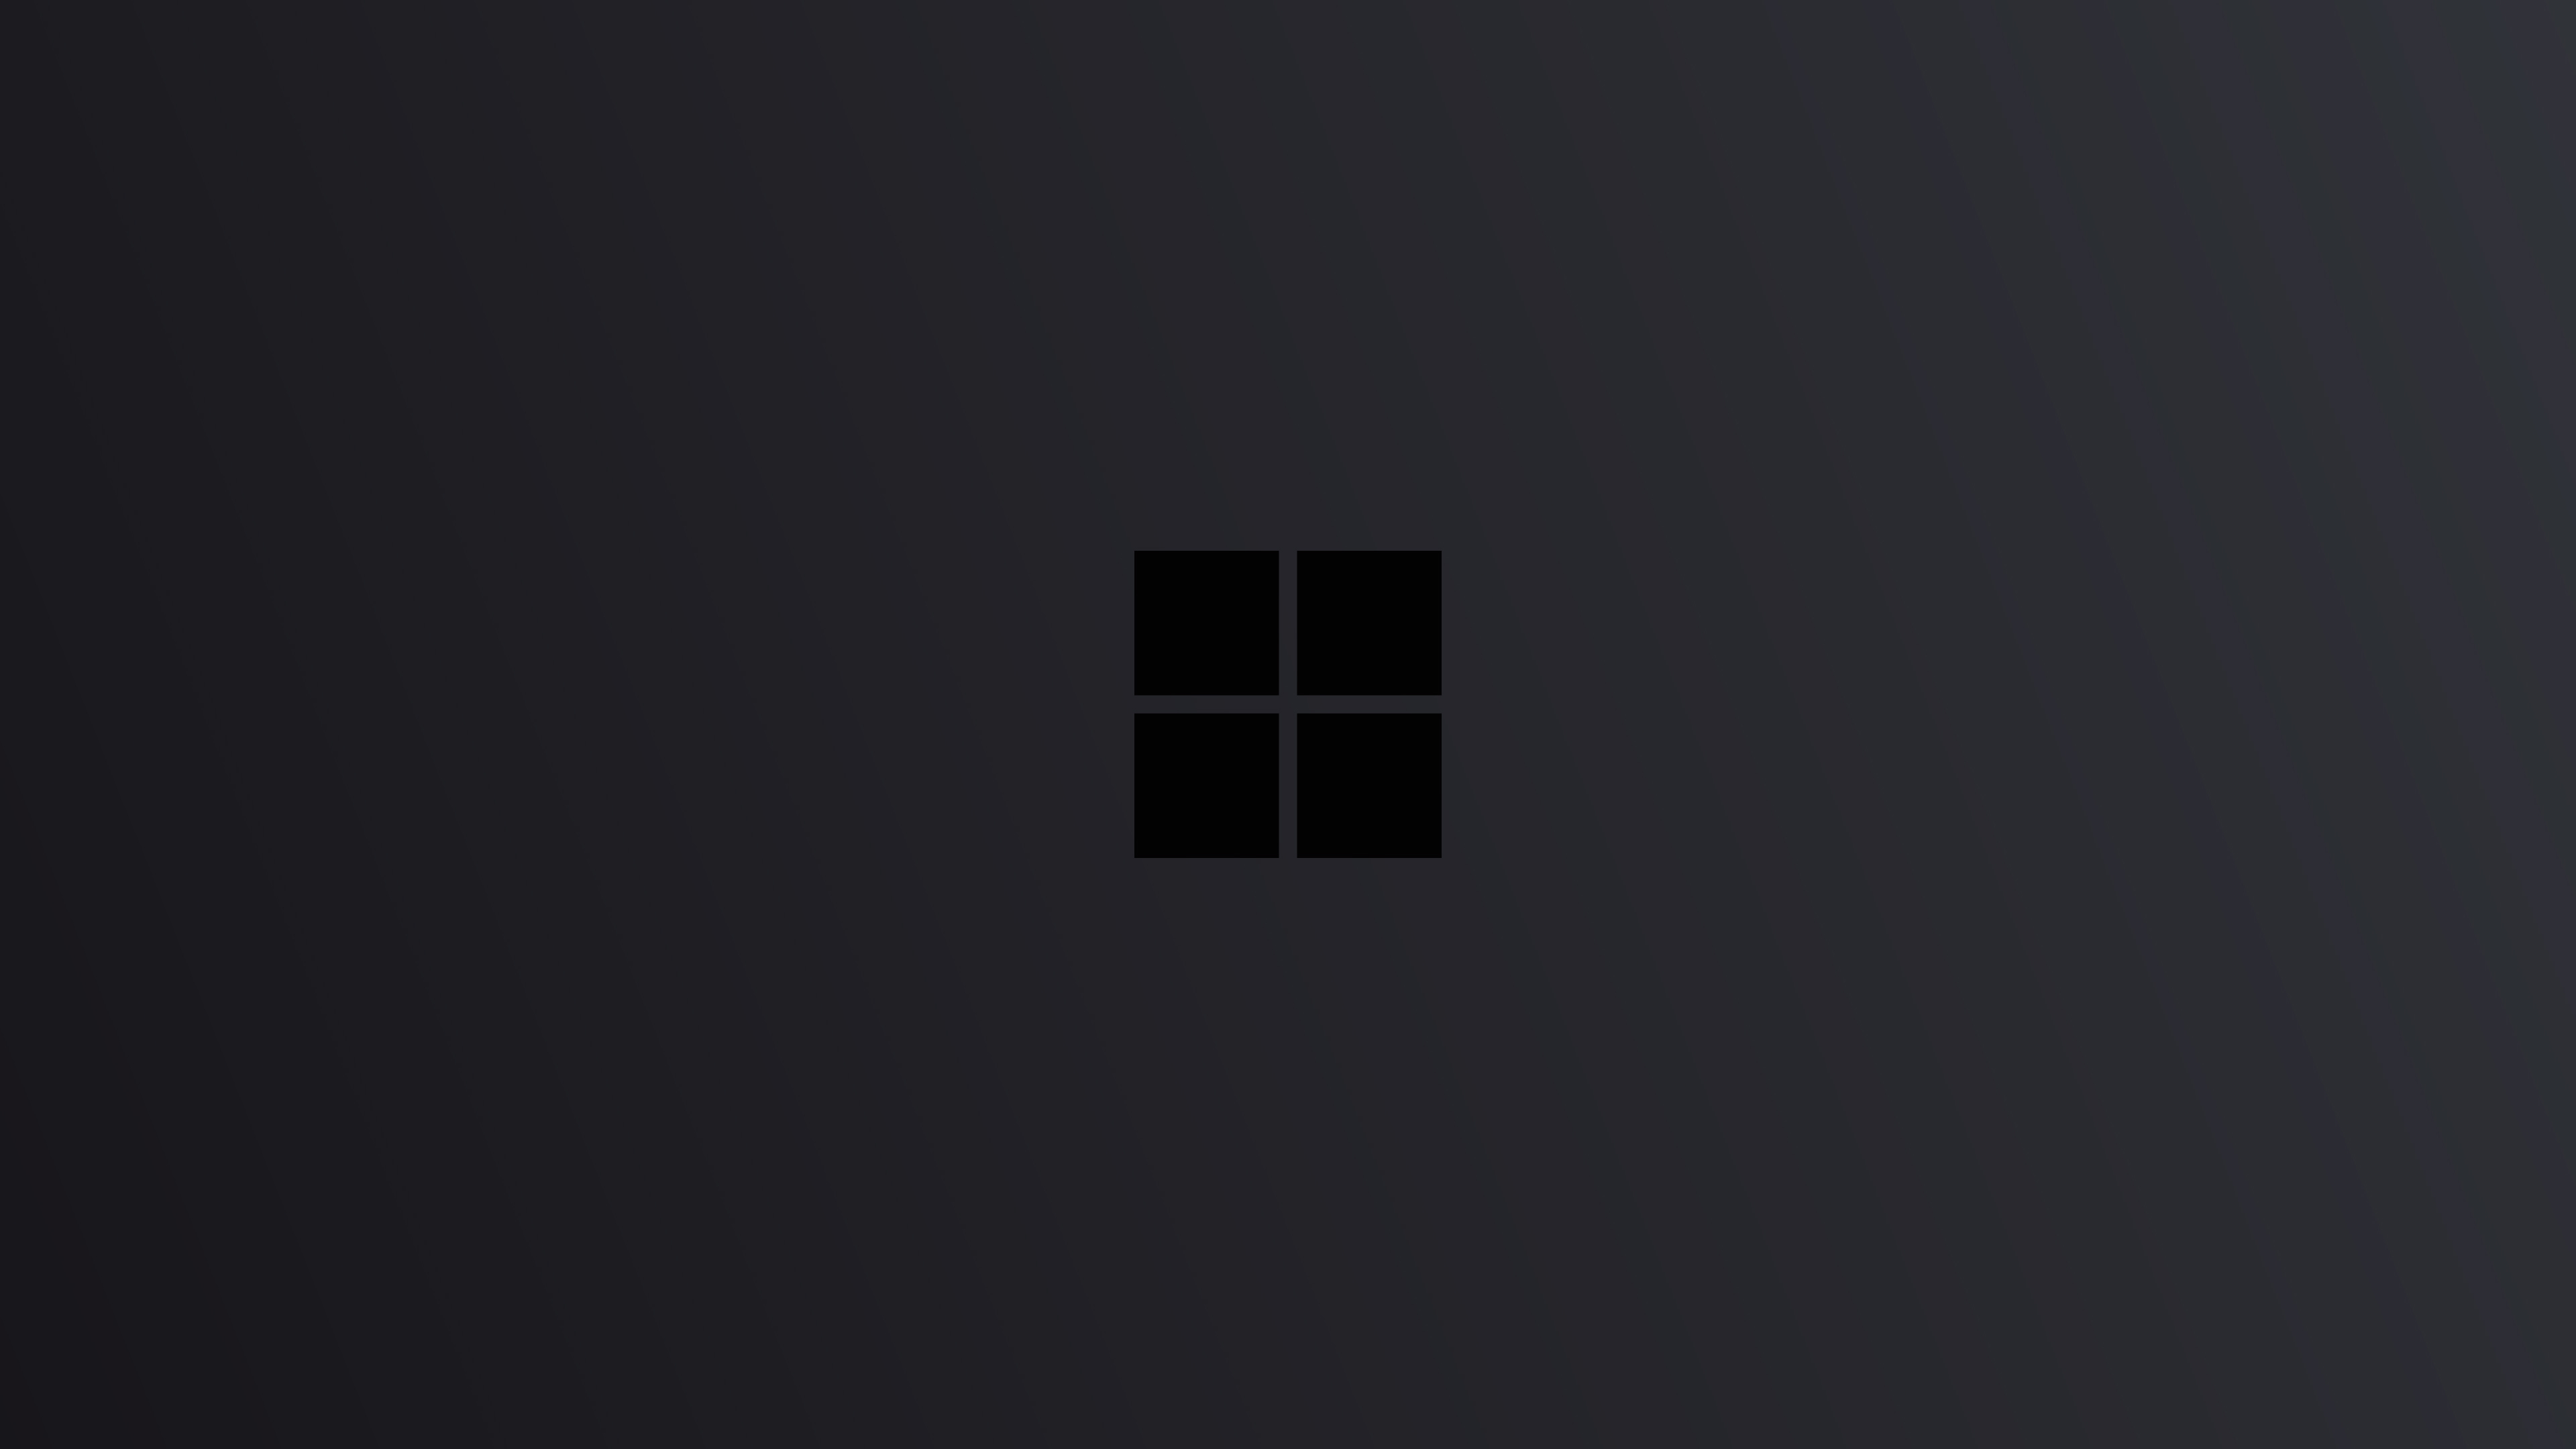 19x10 Windows 10 Logo Minimal Dark 10p Wallpaper Hd Minimalist 4k Wallpapers Images Photos And Background